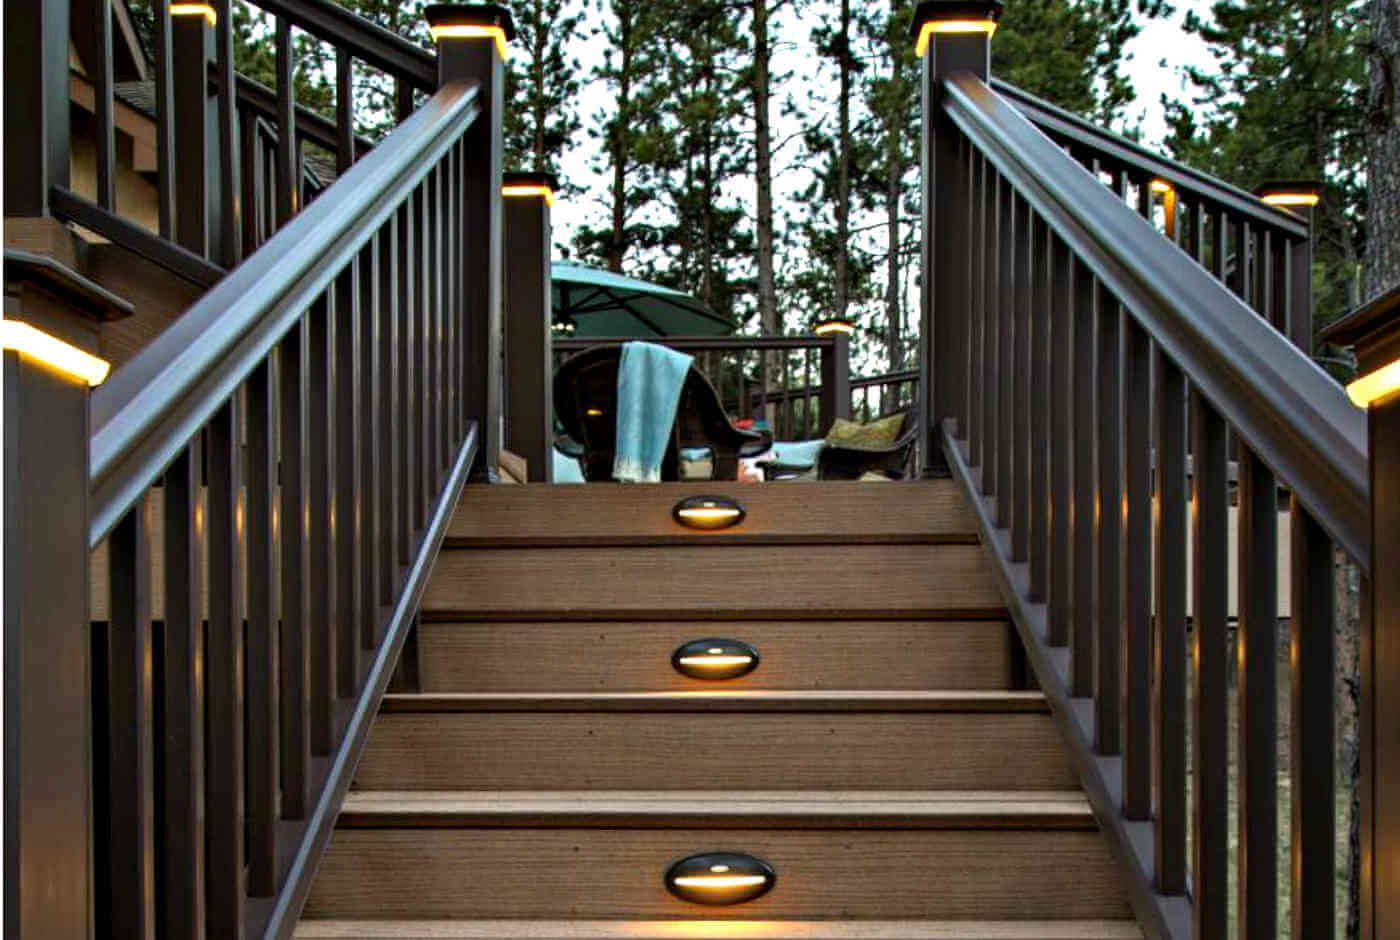 Stair riser lights help light your path